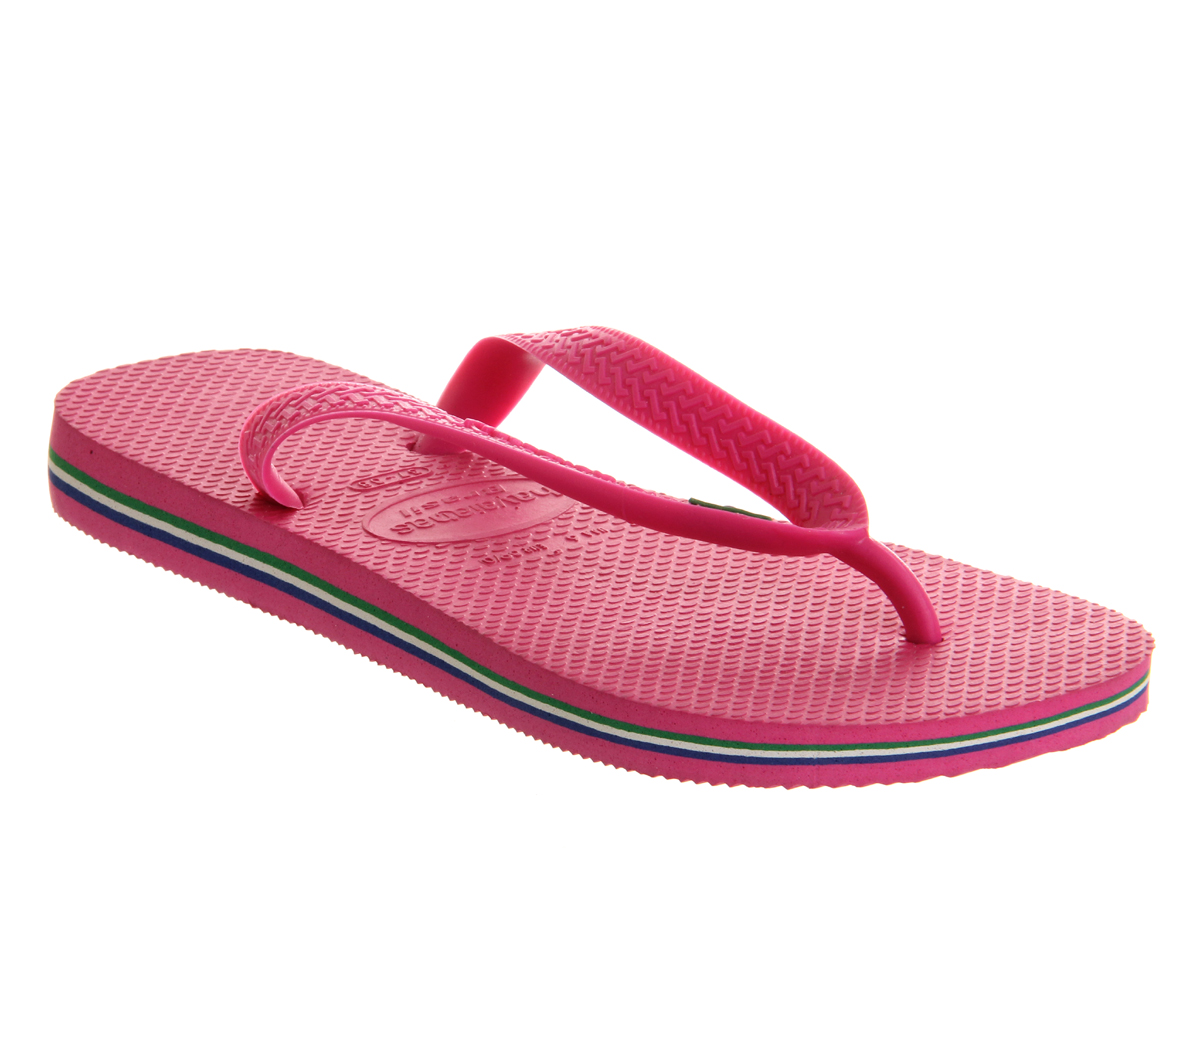 HavaianasBrazil Flip-flopHot Pink Rubber